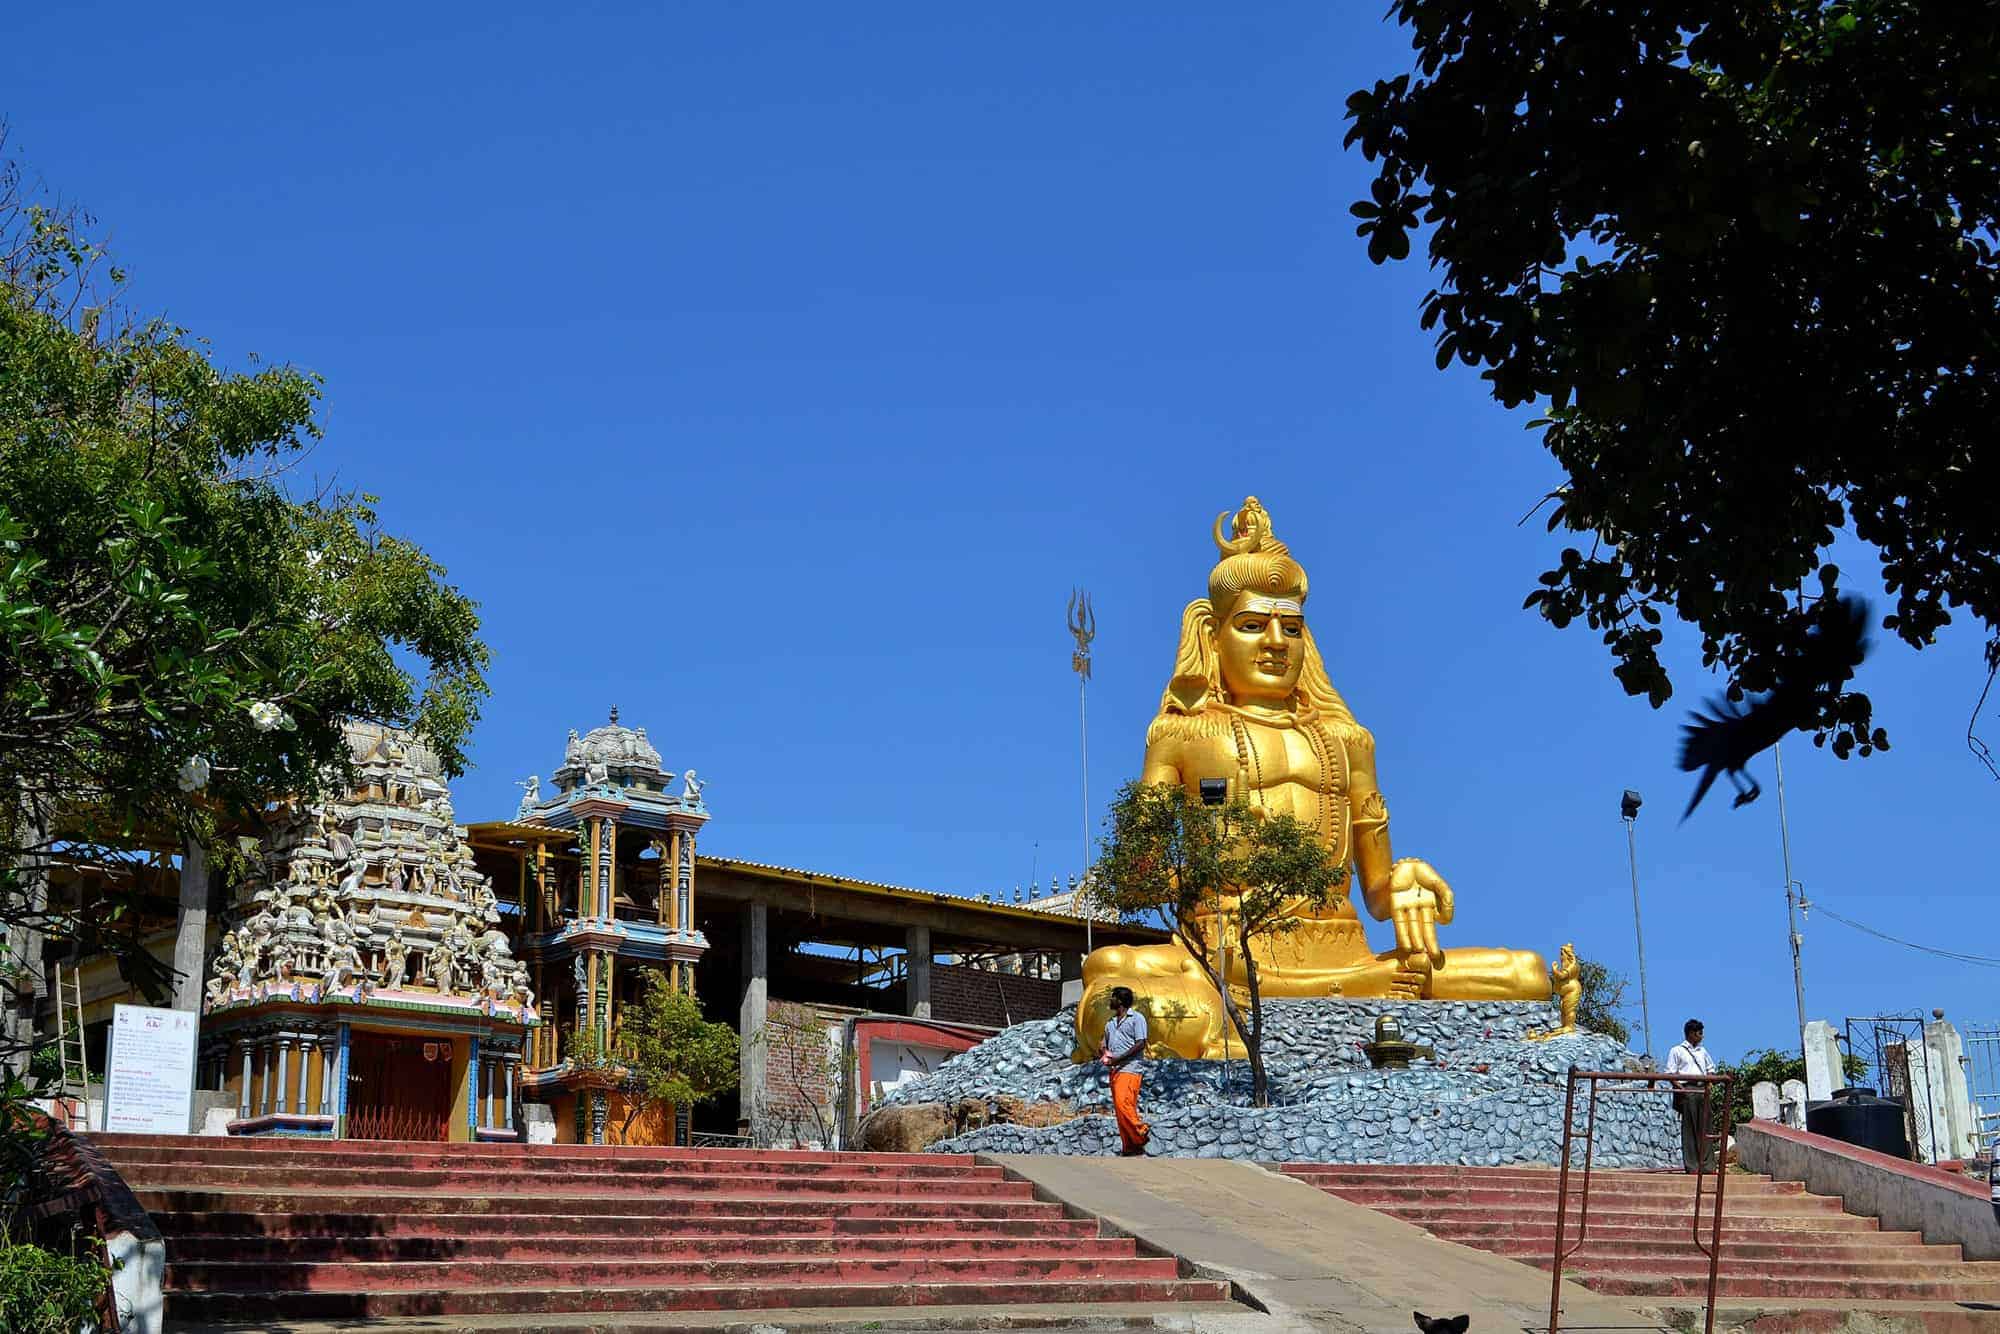 कोनस्वरम मंदिर Koneswaram Temple